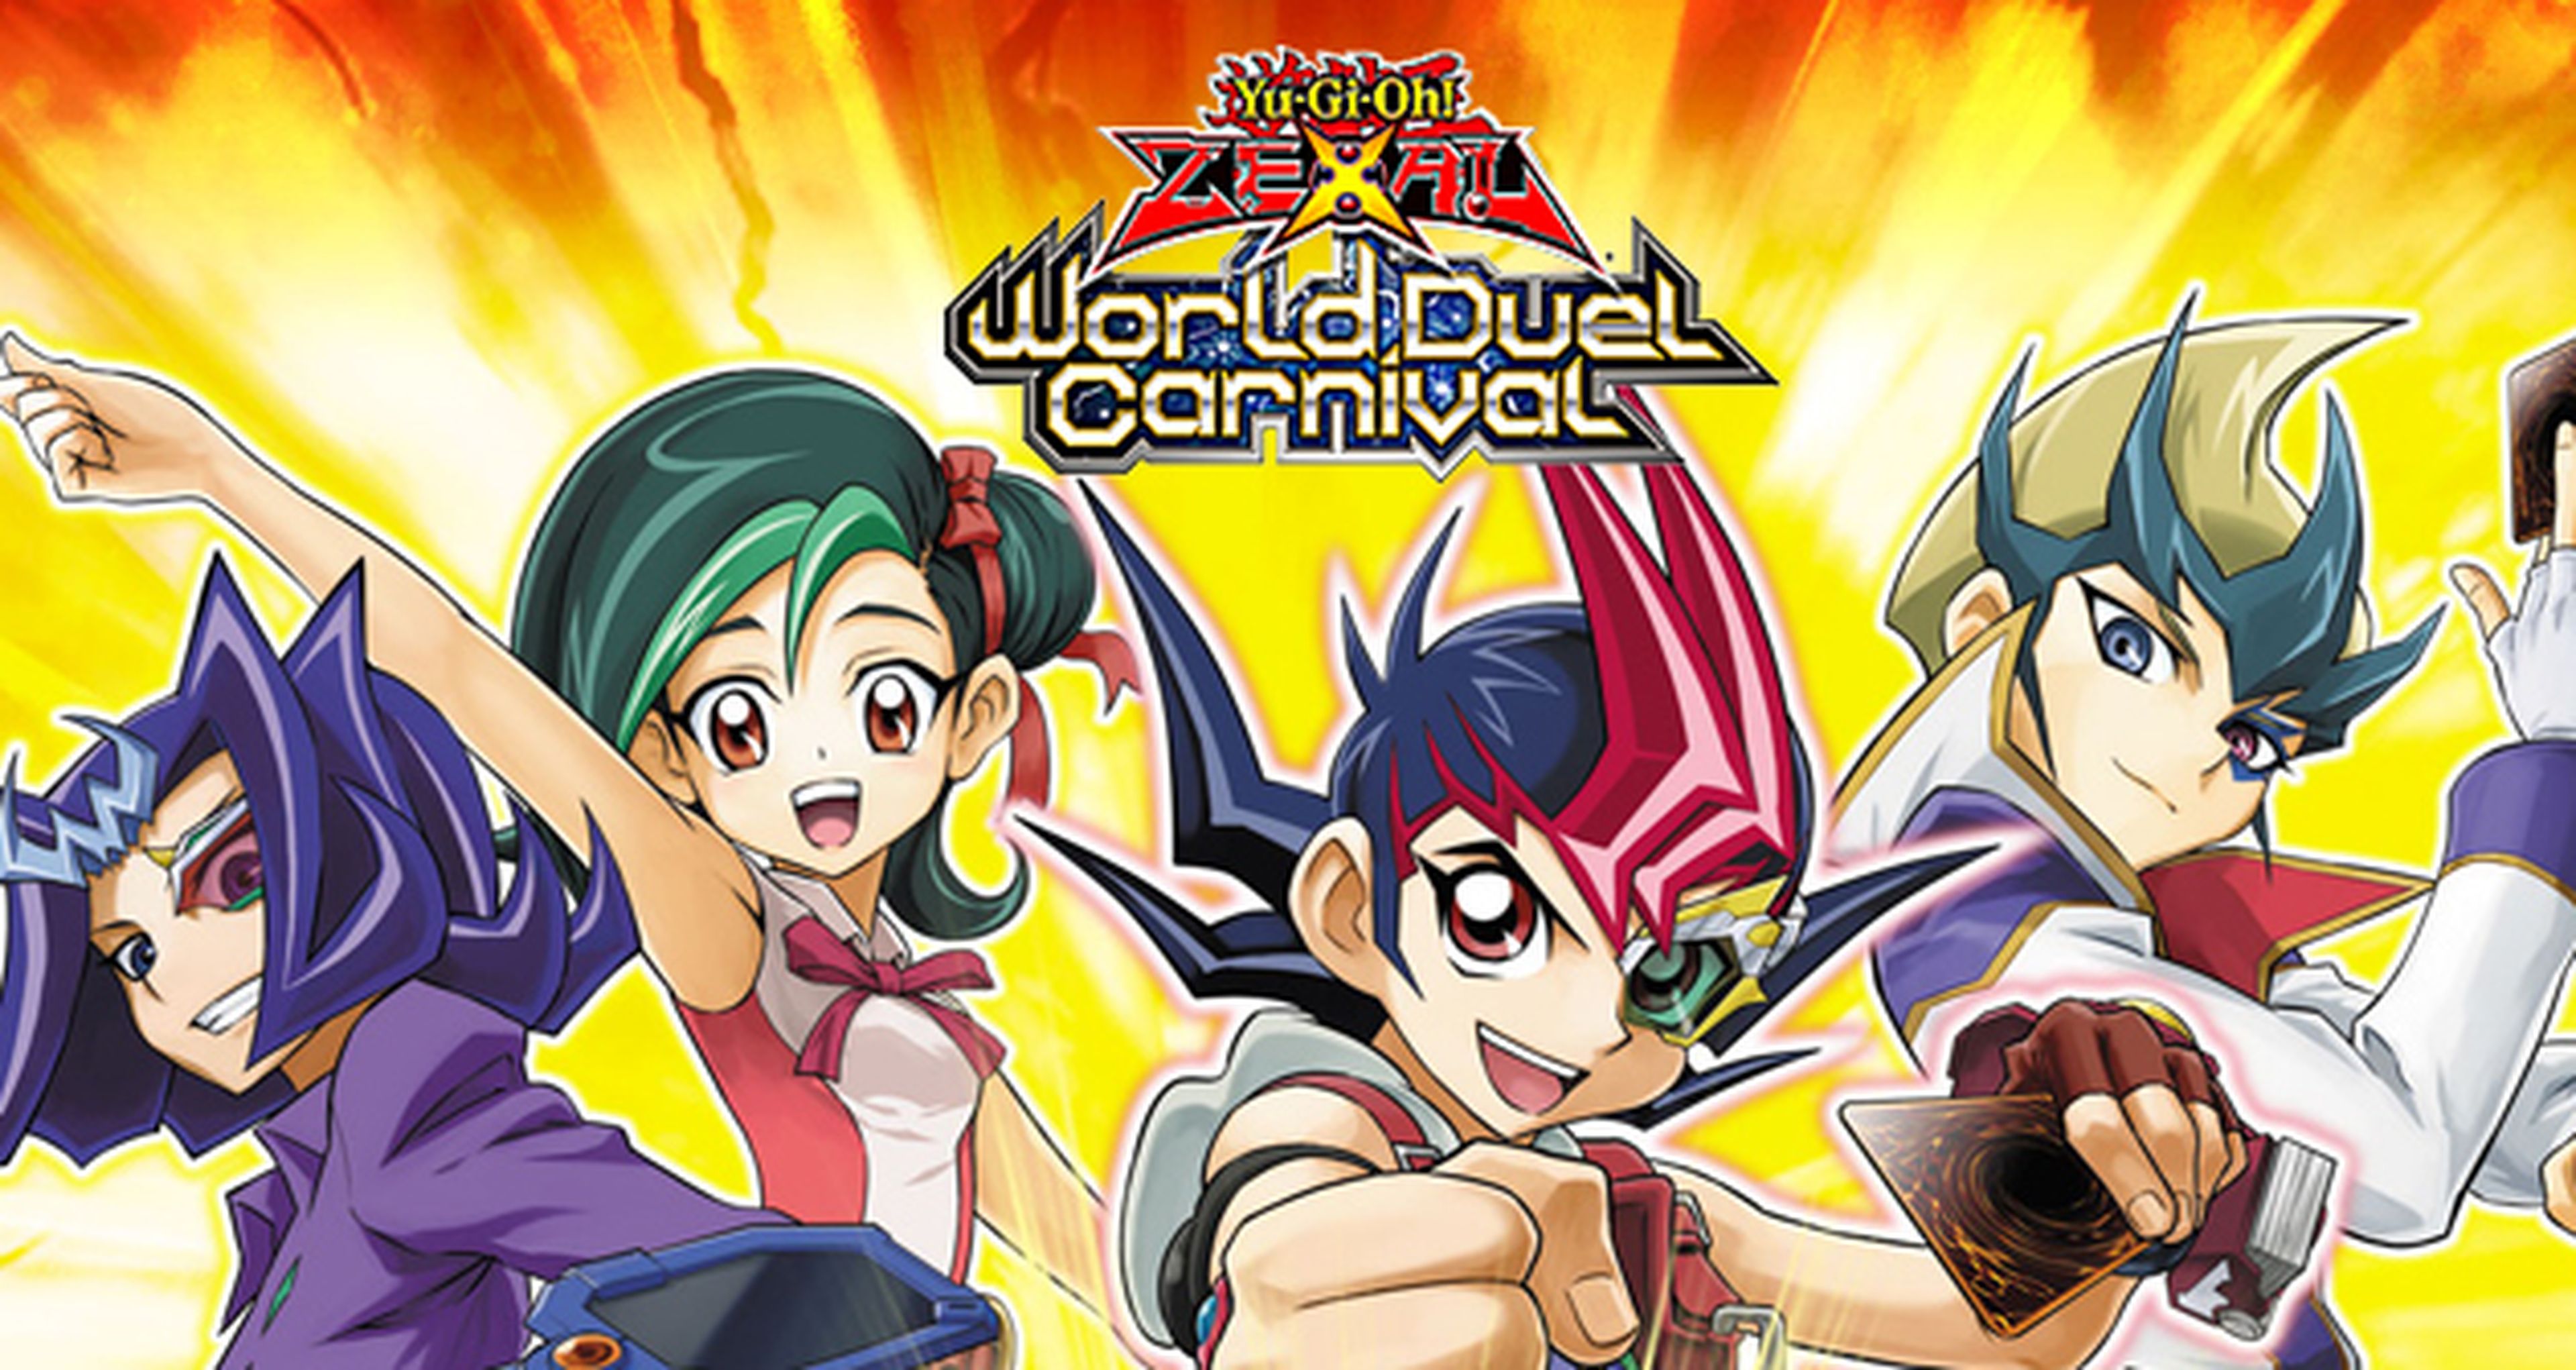 Análisis de Yu-Gi-Oh! Zexal: World Duel Carnival